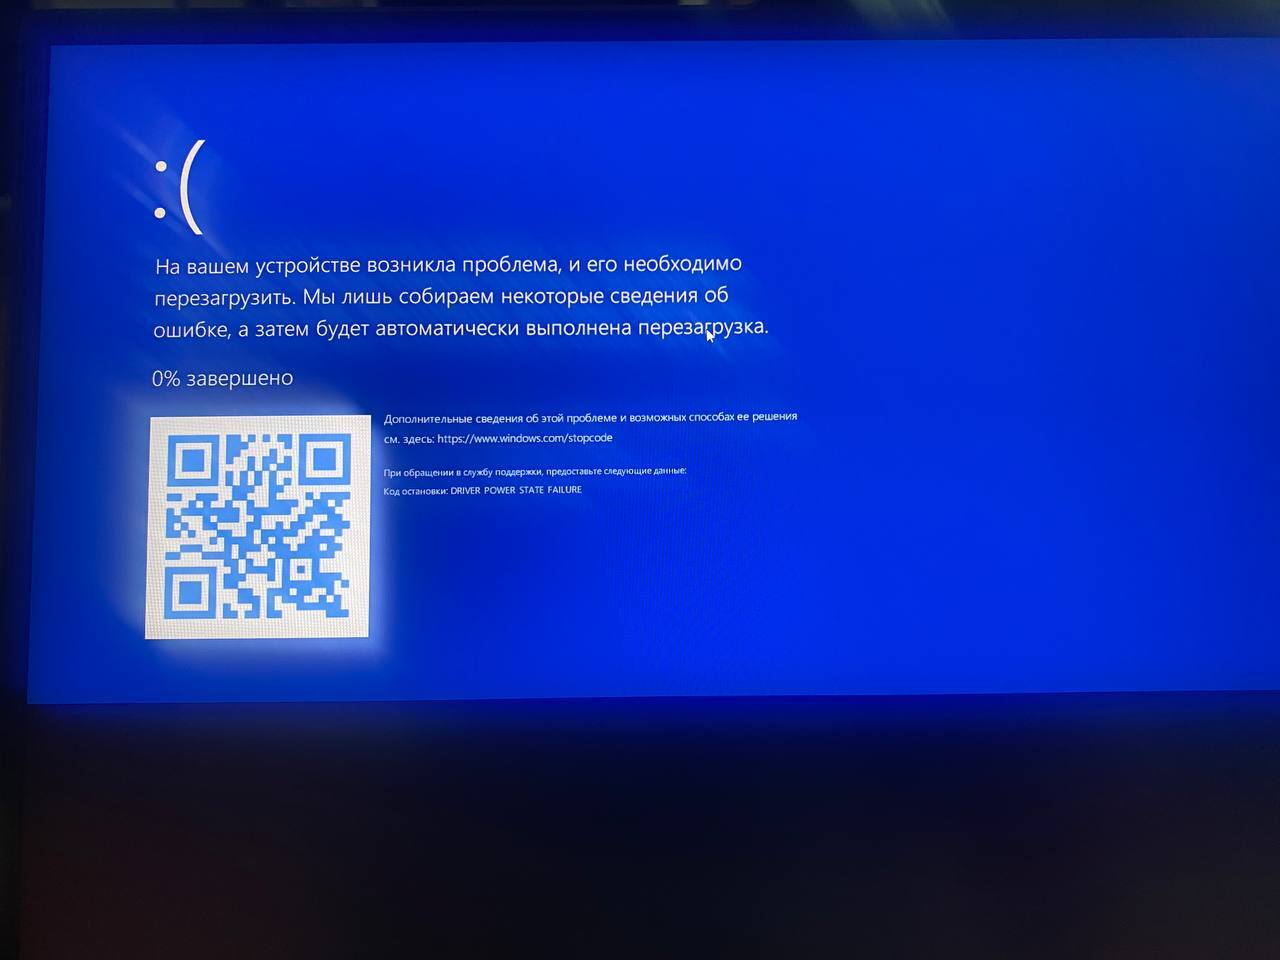 Синий экран page fault in nonpaged. На вашем ПК возникла проблема и его необходимо перезагрузить. На вашем ПК возникла ошибка и его необходимо перезагрузить Windows 10.